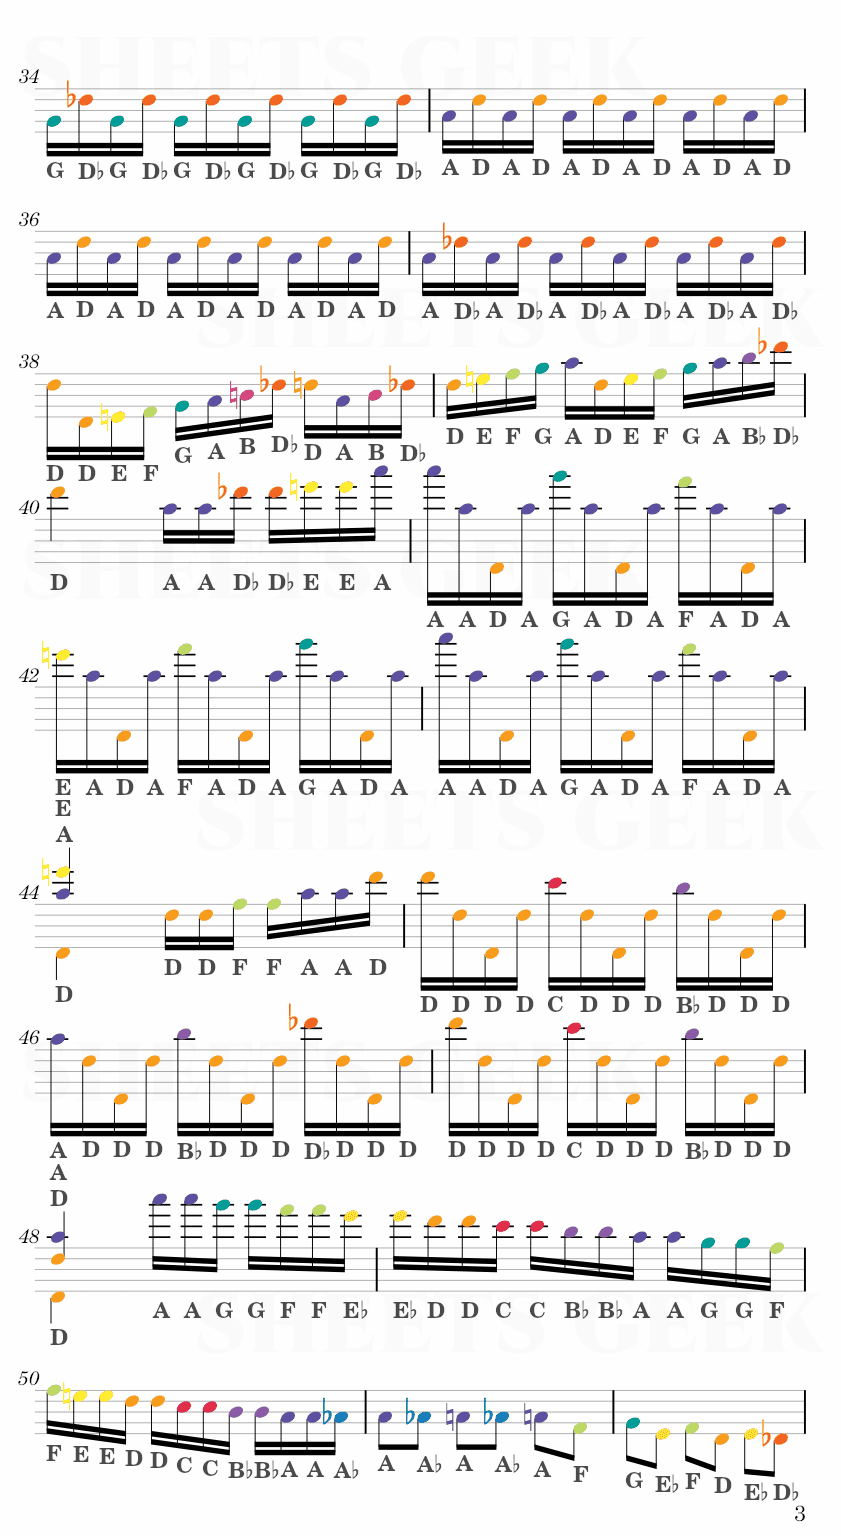 Summer Third Movement - Vivaldi Easy Sheet Music Free for piano, keyboard, flute, violin, sax, cello page 3